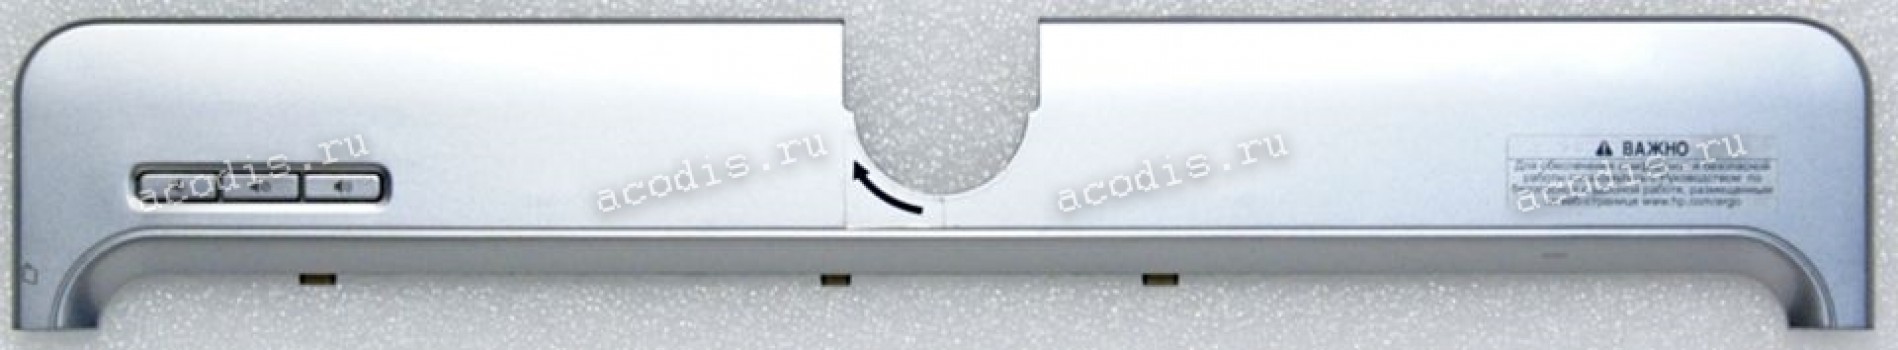 Верх. рамка клавиатуры HP Pavilion TX2000, TX2500 серебристая (464115-001)